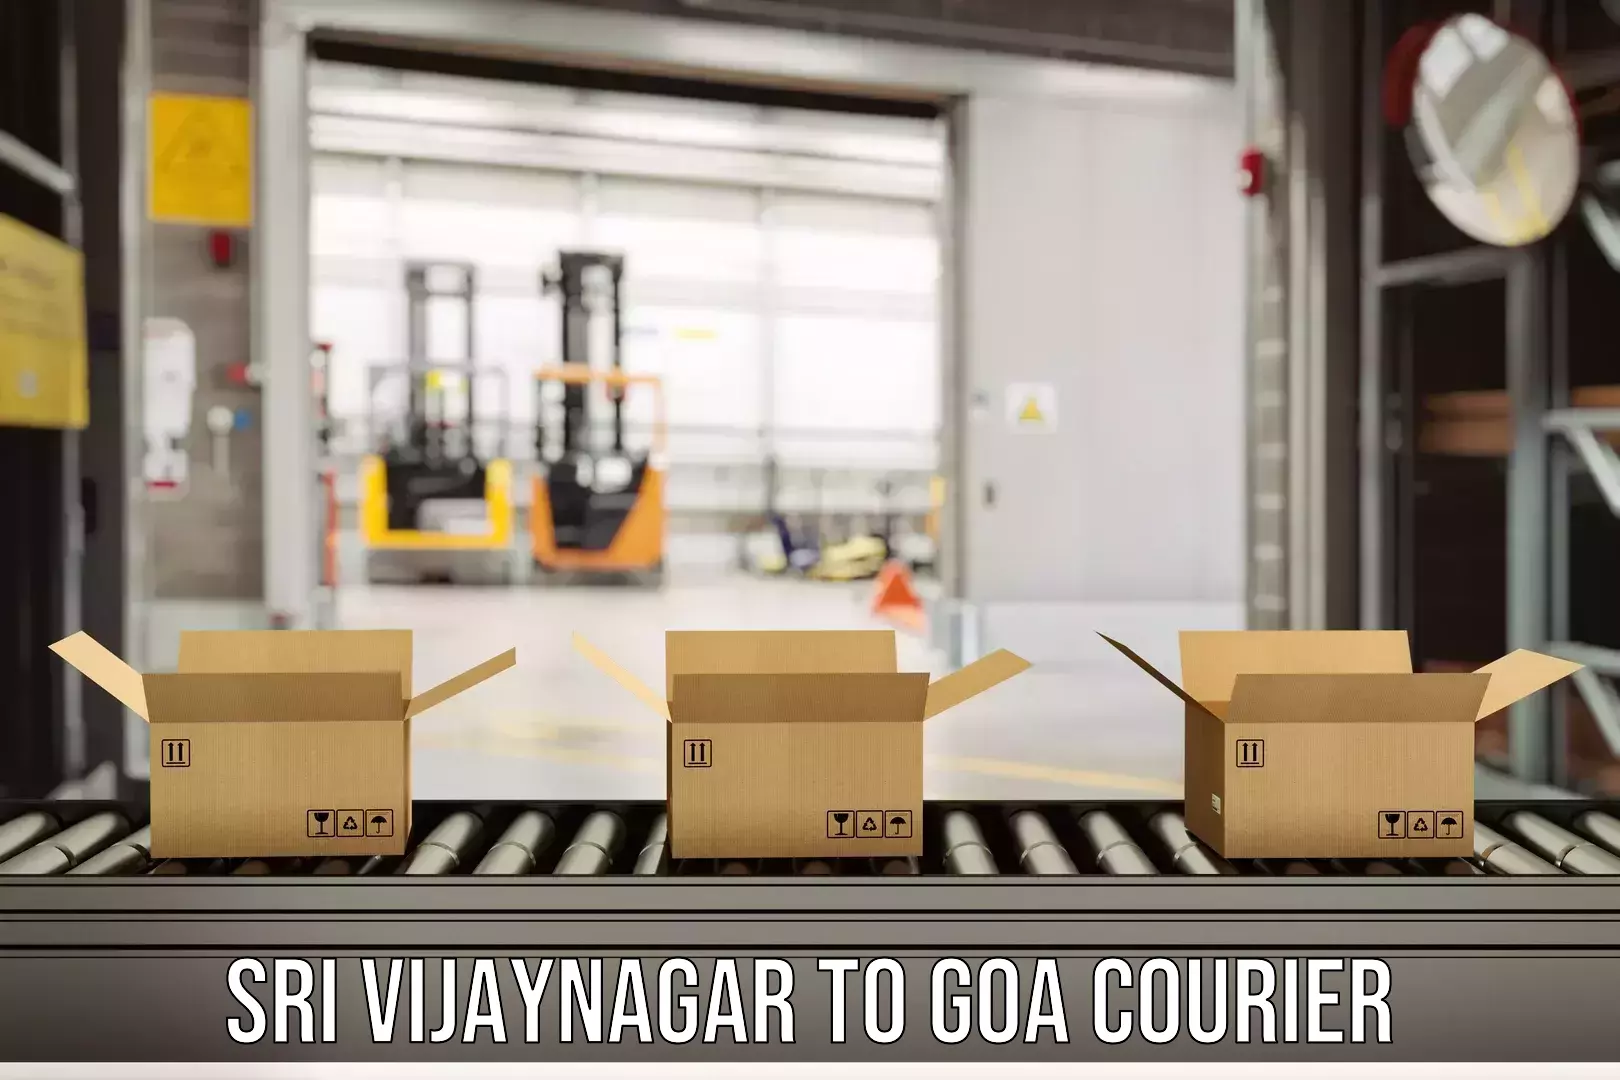 Nationwide delivery network Sri Vijaynagar to Vasco da Gama